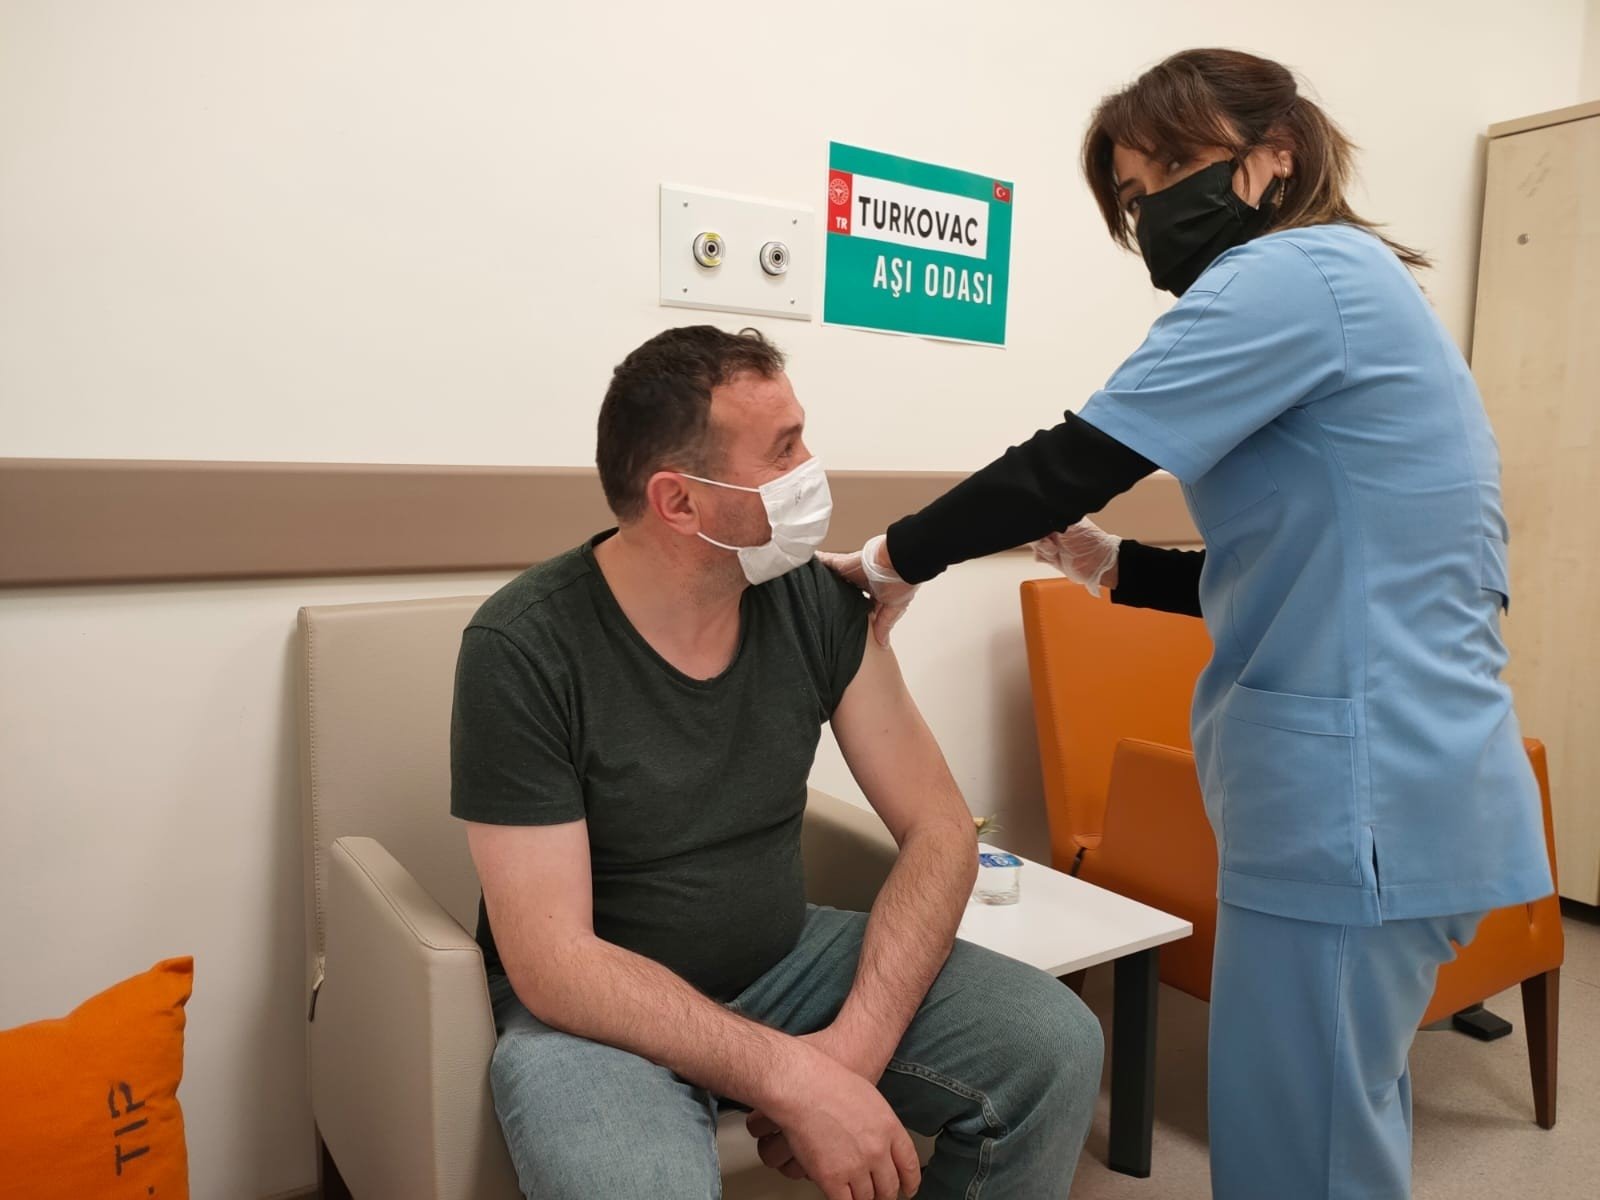 A man gets vaccinated with Turkovac, in Giresun, northern Turkey, March 7, 2022. (IHA Photo)